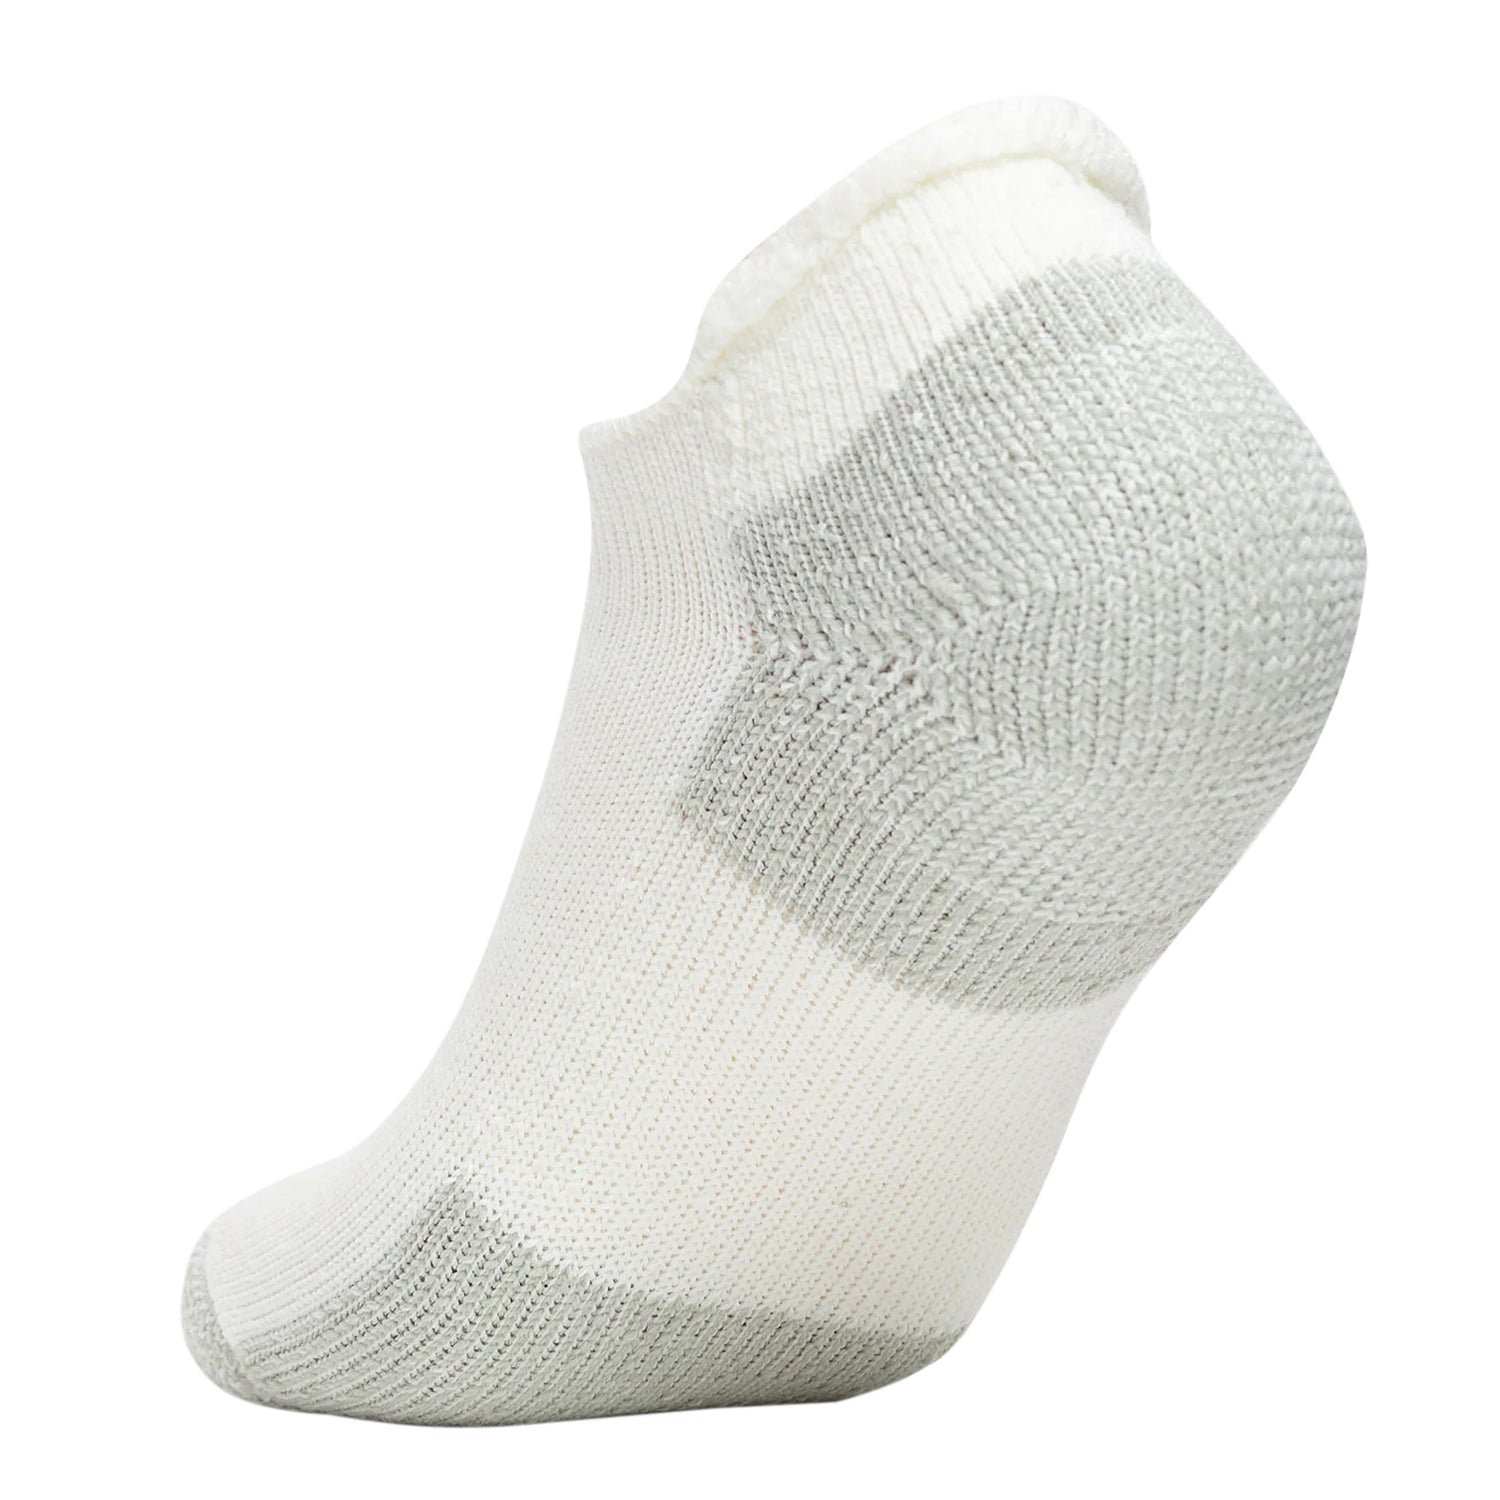 Peltz Shoes  Unisex Thorlo Socks Maximum Cushion Rolltop Running Socks- 1 Pair White Platinum J00000-WPL